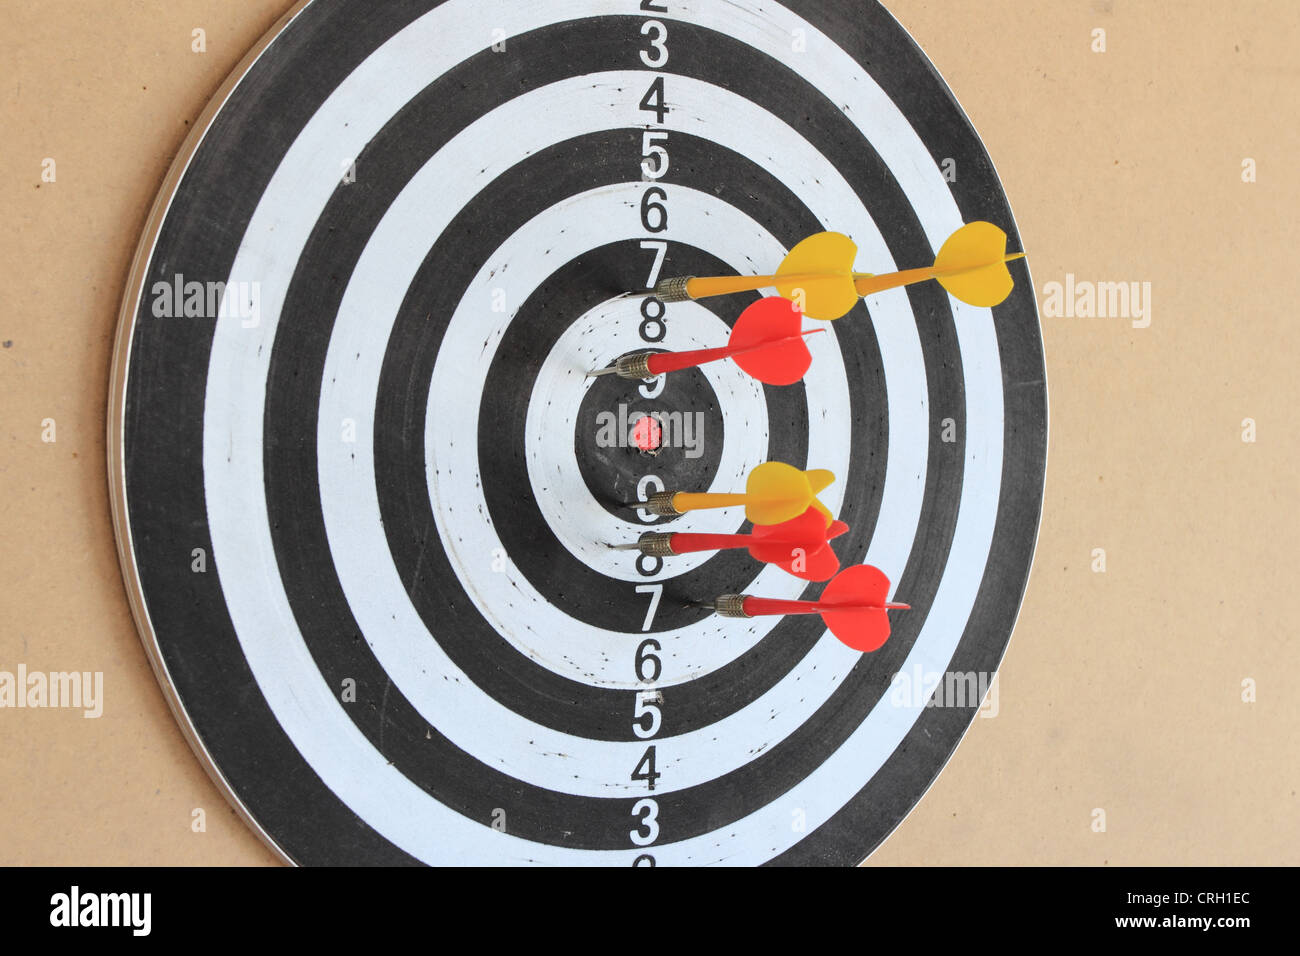 dartboard with darts Stock Photo